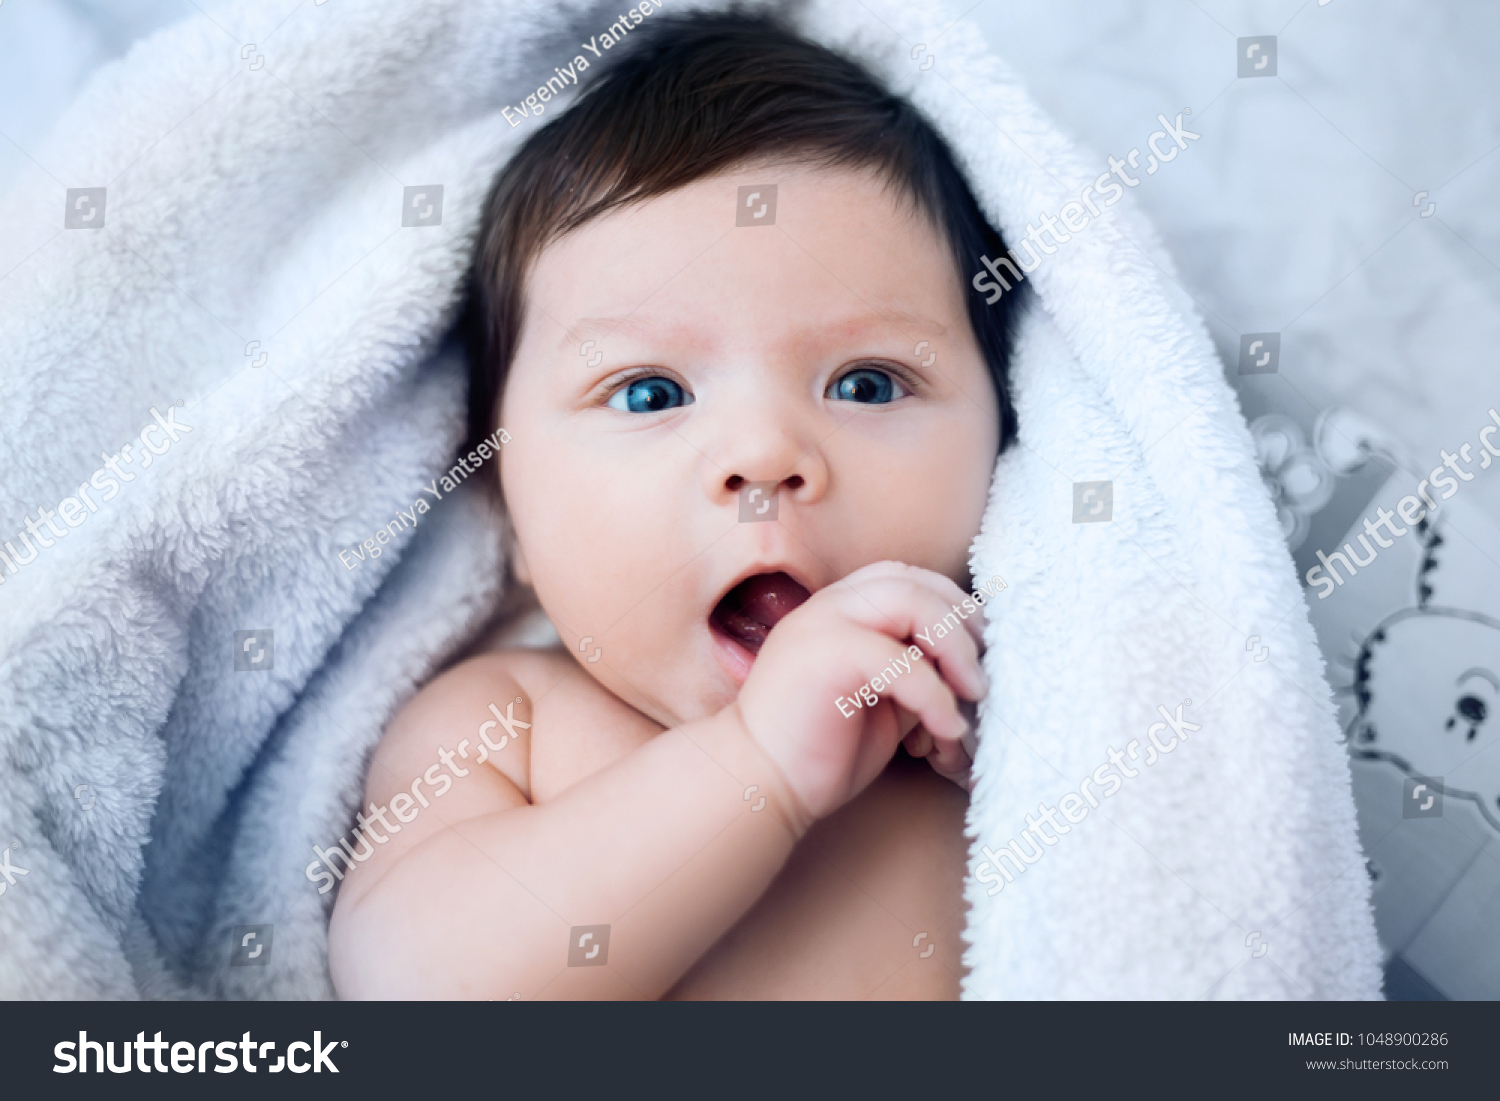 Baby Newborn Baby Cute Blueeyed Dark Stockfoto Jetzt Bearbeiten 1048900286